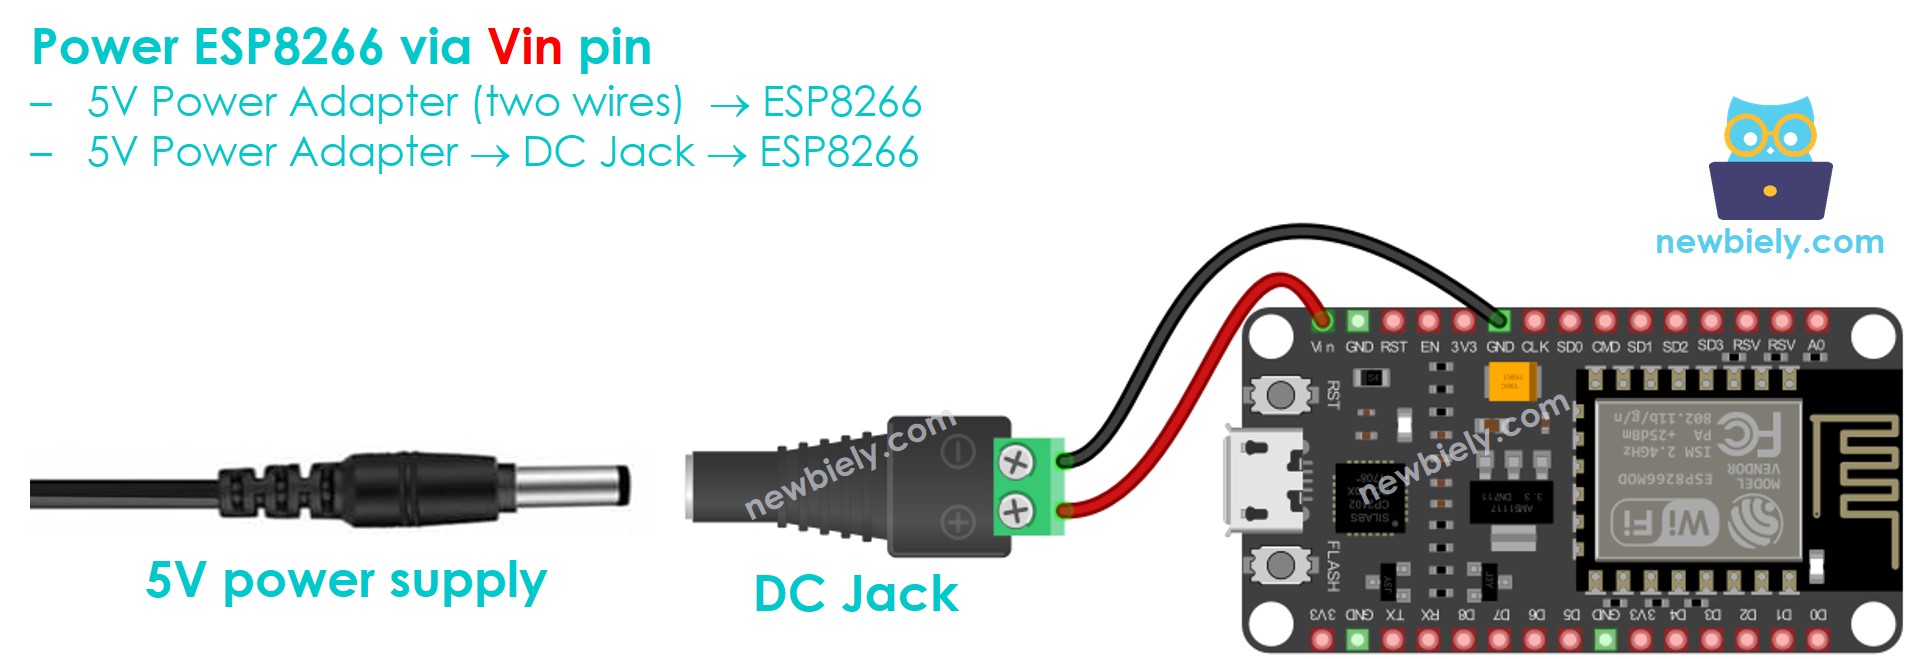 how to power ESP8266 NodeMCU via Vin pin